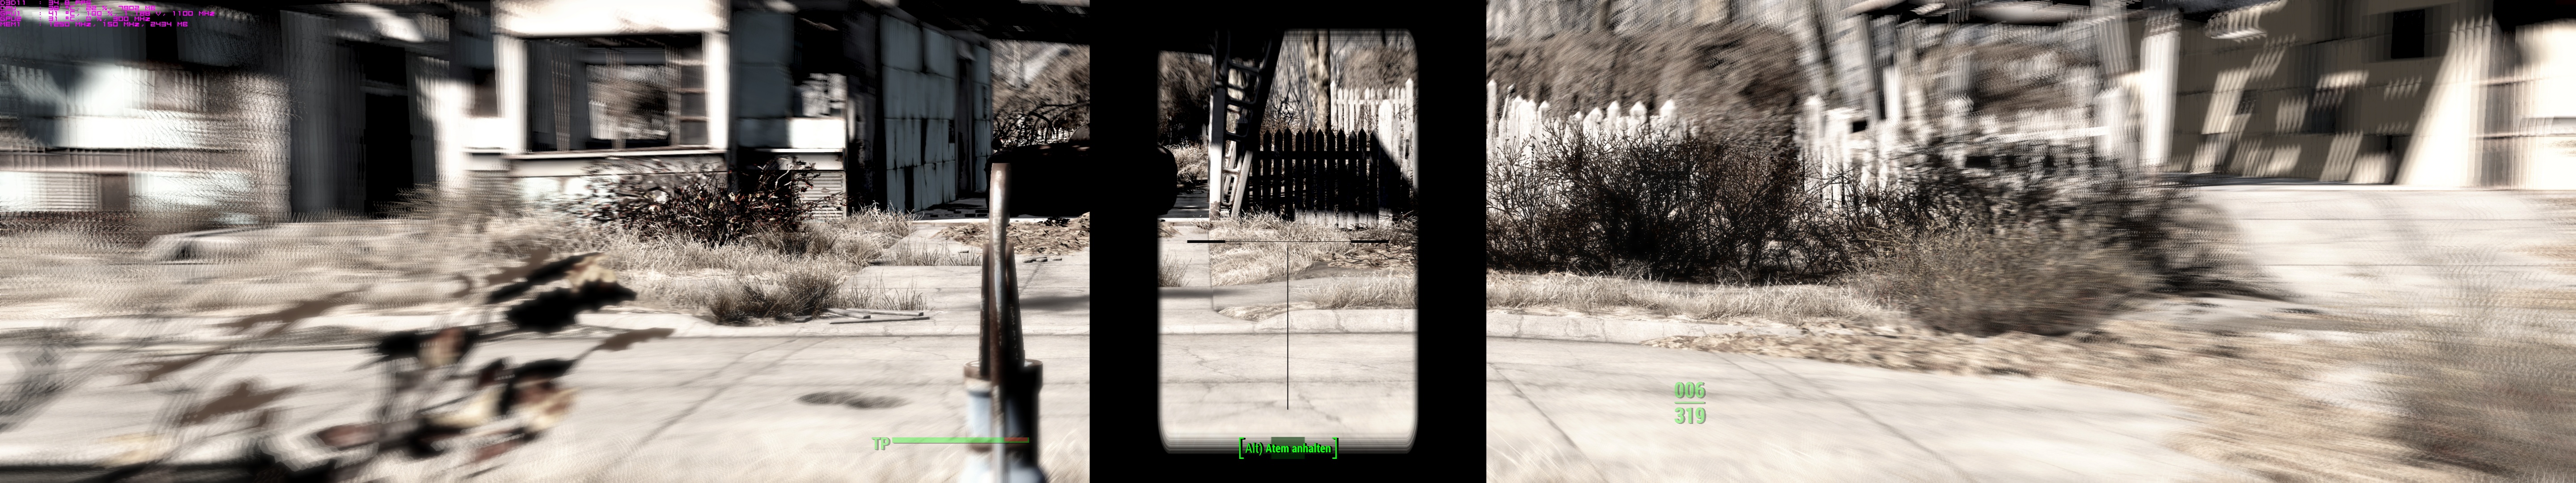 Fallout4_2015_11_15_17_57_43_270.jpg